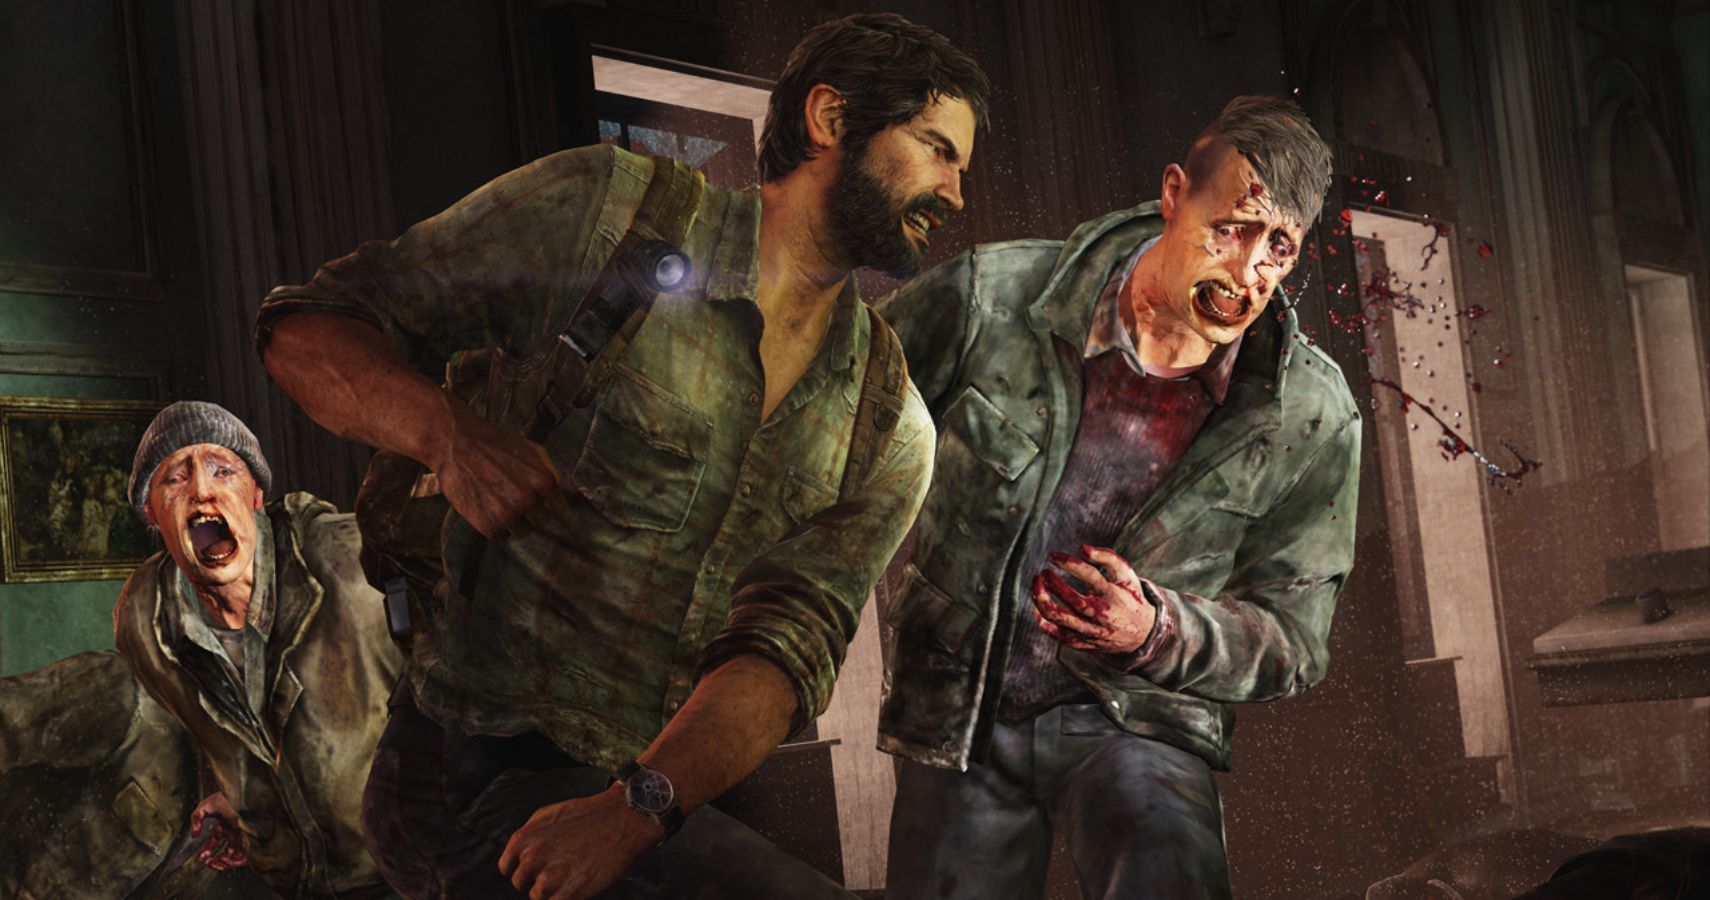 Troy Baker quer Josh Brolin para interpretar Joel na série de The Last of Us